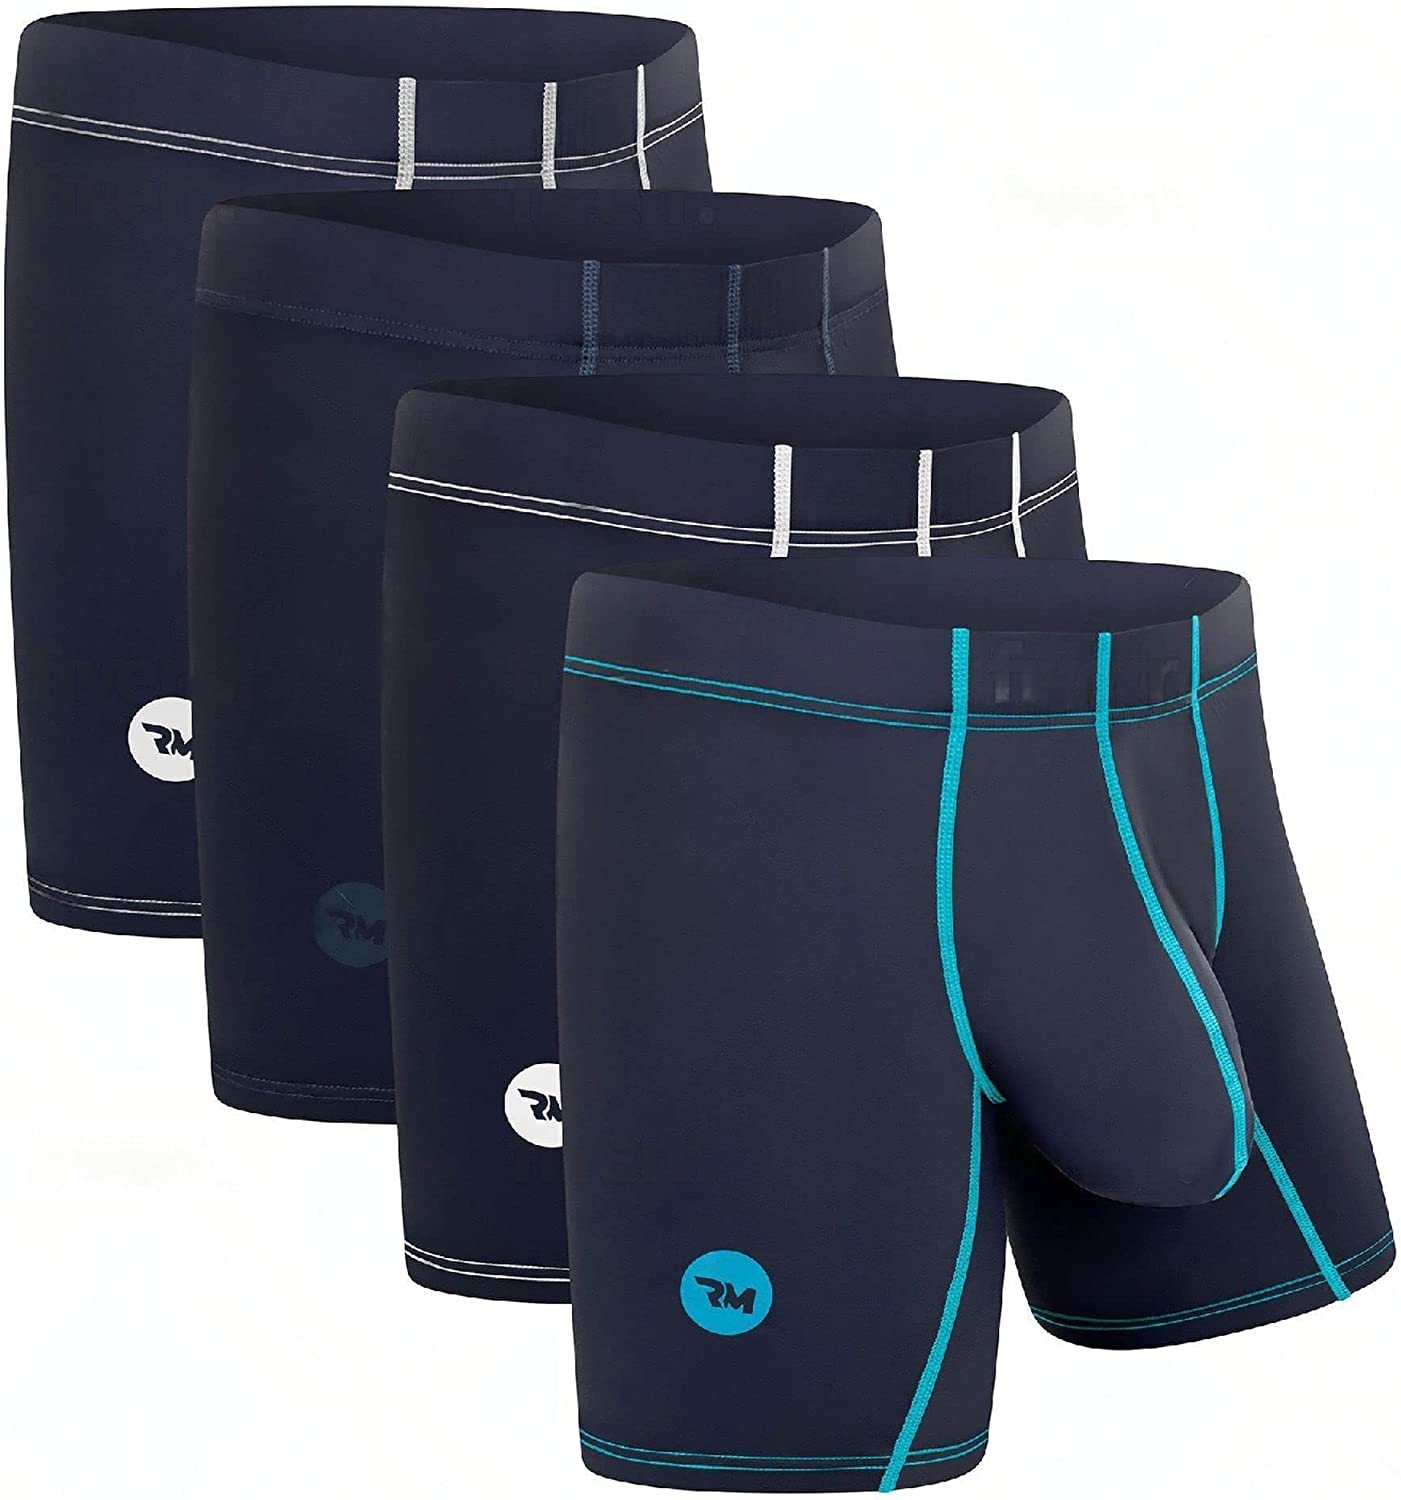 Aayomet Men'S Underwear Men's Enhancing Underwear Briefs Ice Silk